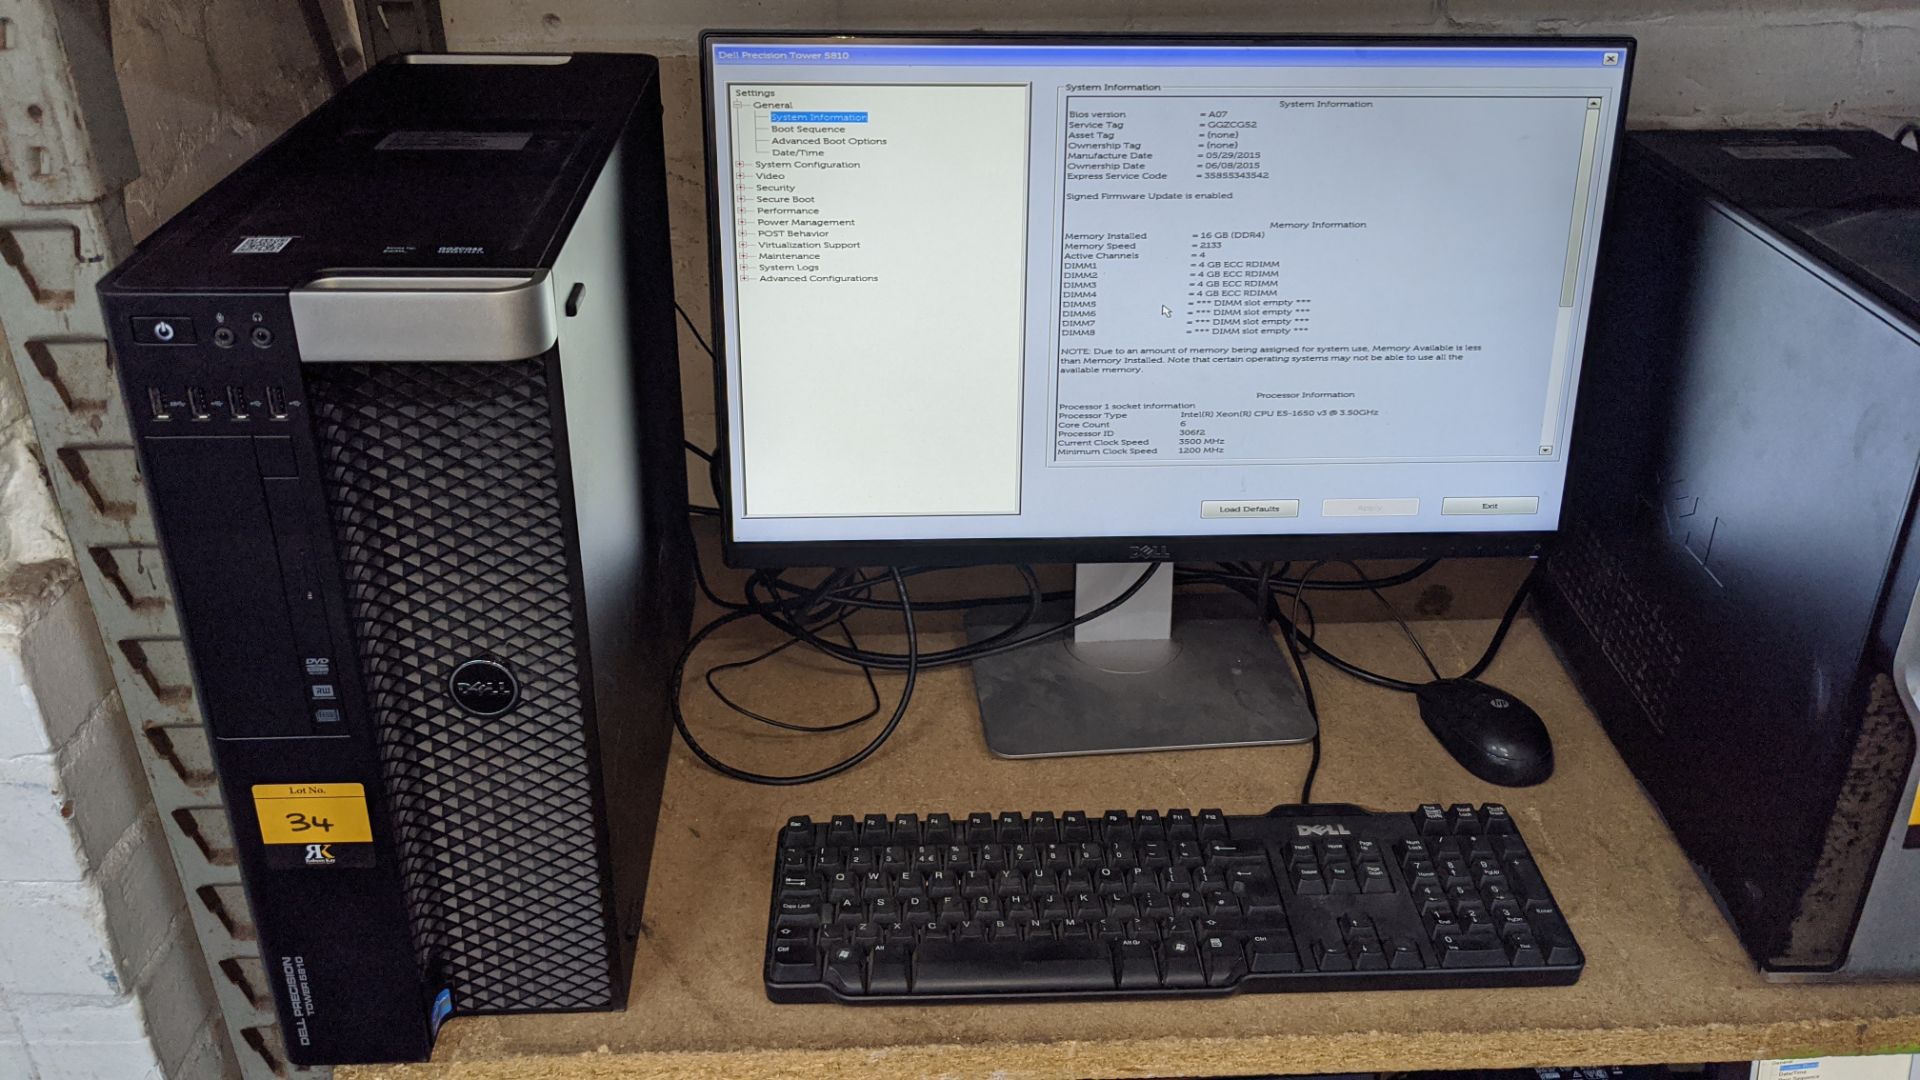 Dell Precision tower 5810 computer with Intel Xeon E5-1650 V3 processor, 16Gb RAM, 256Gb SSD etc, in - Image 2 of 5